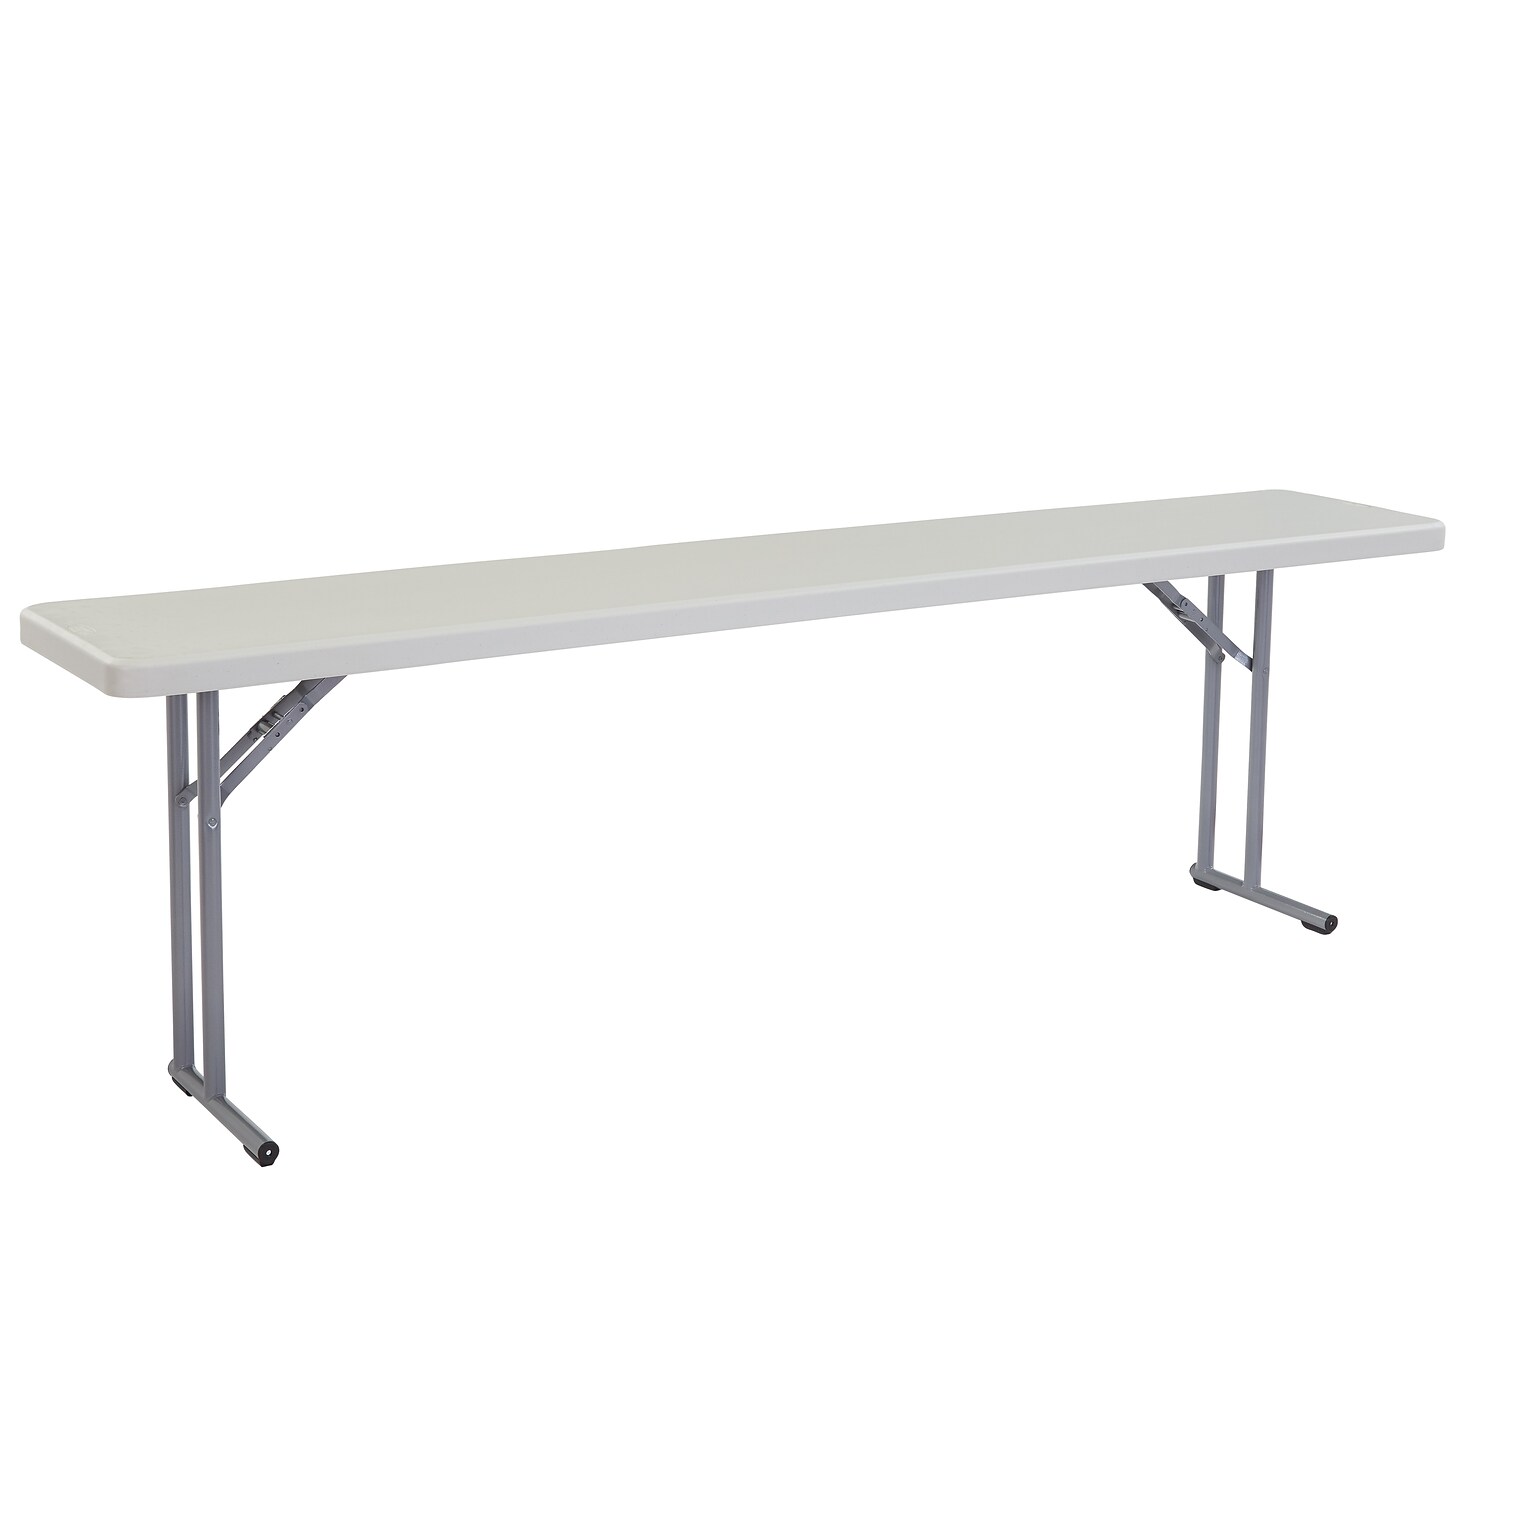 NPS® Heavy Duty Seminar Folding Table, 18 x 96, Speckled Gray (BT1896)